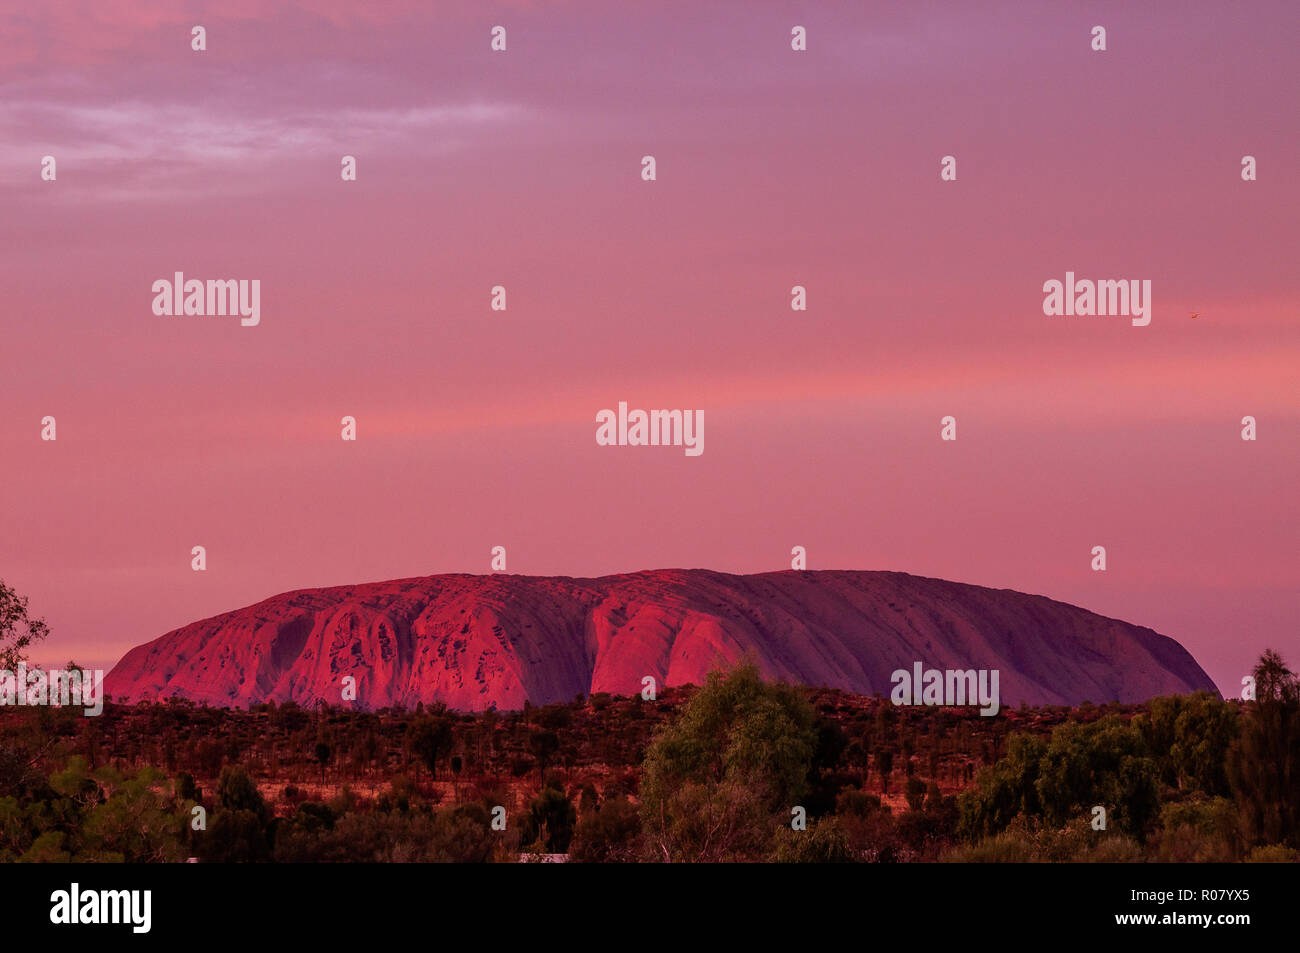 OUTBACK, AUSTRALIEN - 30. APRIL 2009: rot-lila Uluru, Ayers Rock bei Sonnenuntergang - eines der UNESCO-Welterbe Stockfoto